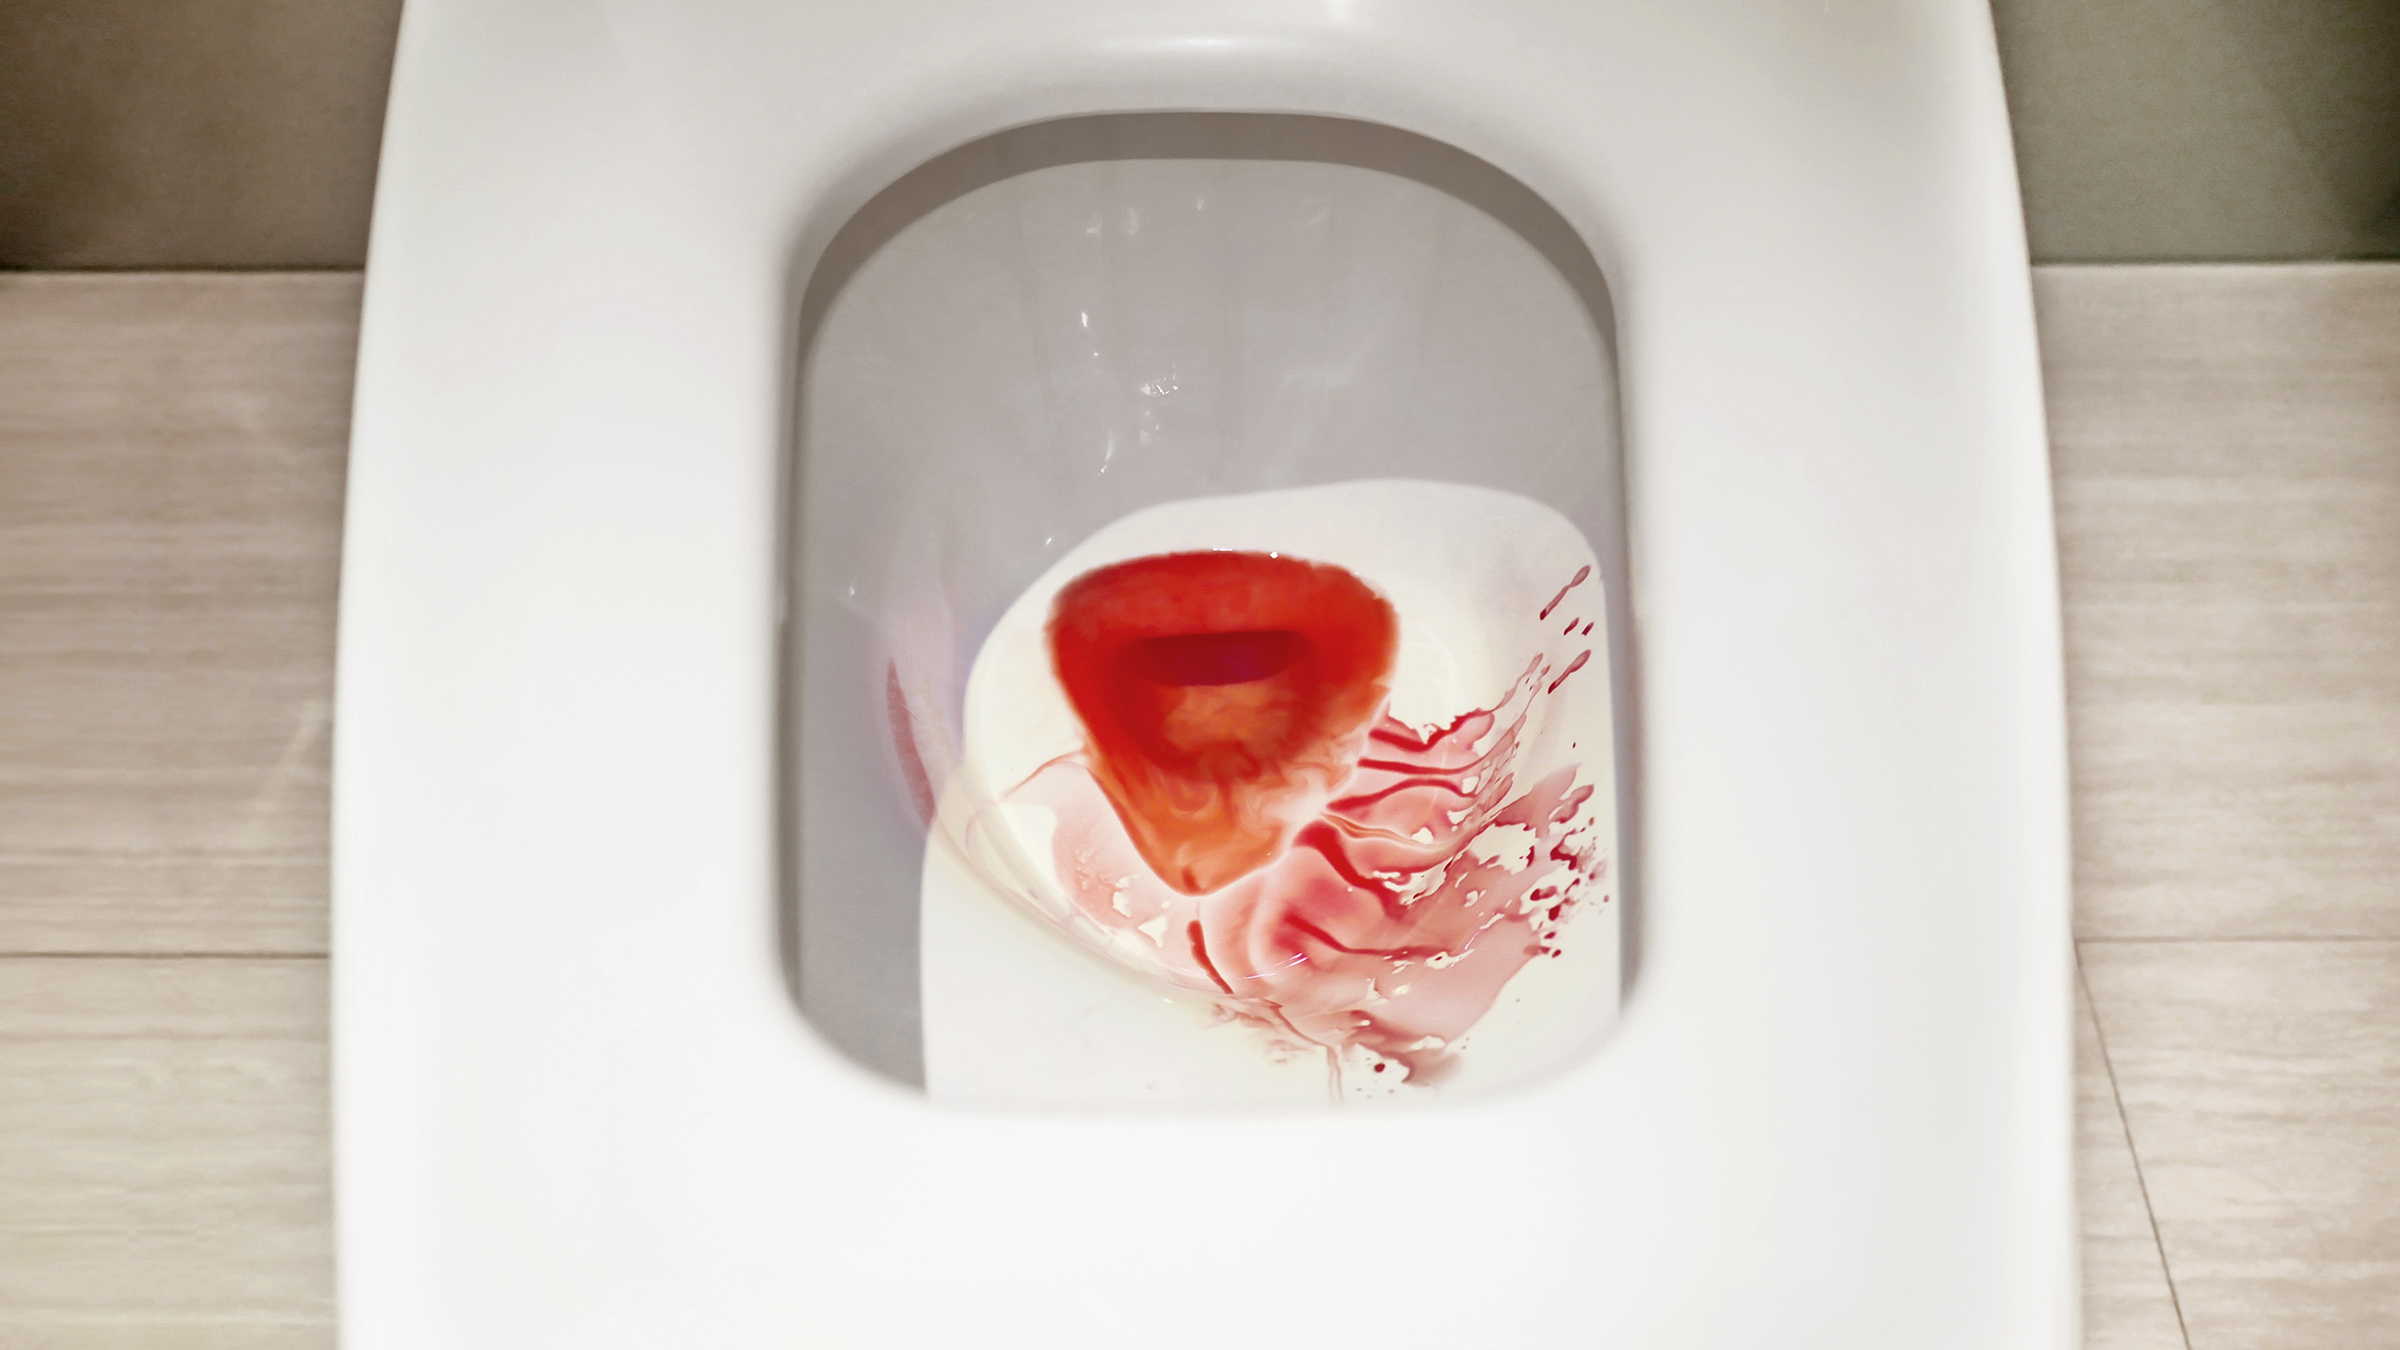 Normal Urine In Toilet